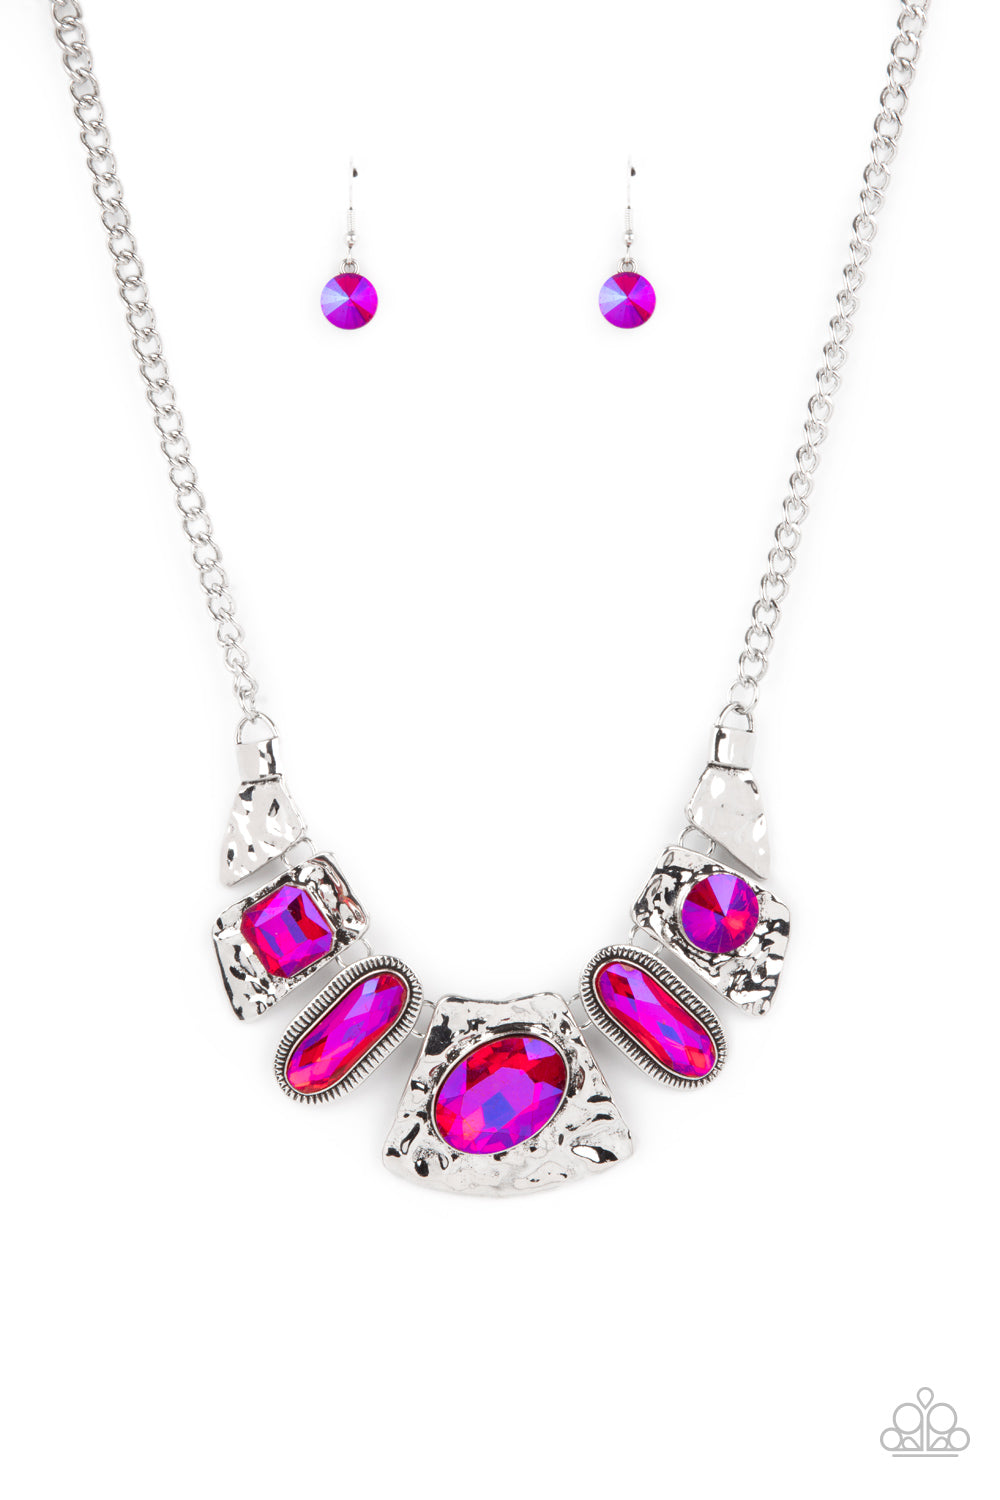 Futuristic Fashionista – Pink Necklace